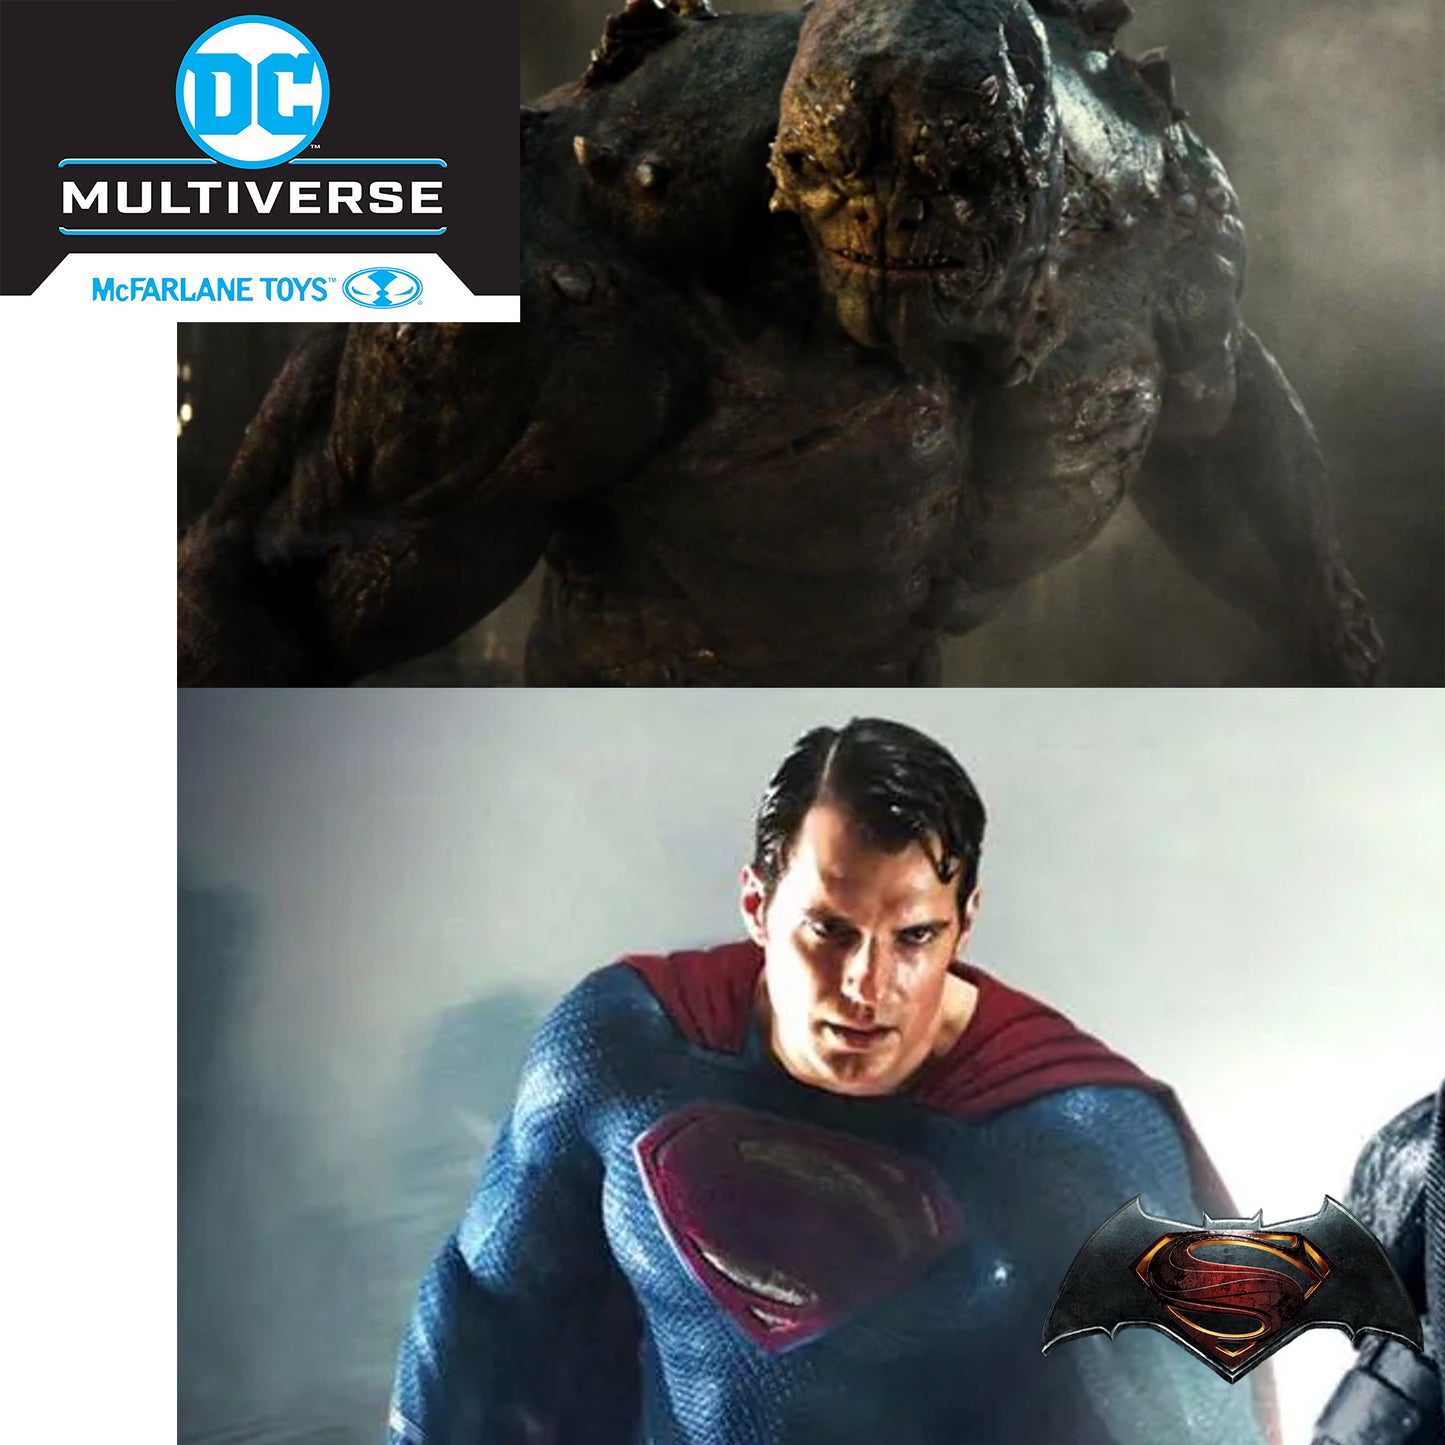 DC Multiverse Superman vs Doomsday (BvS)